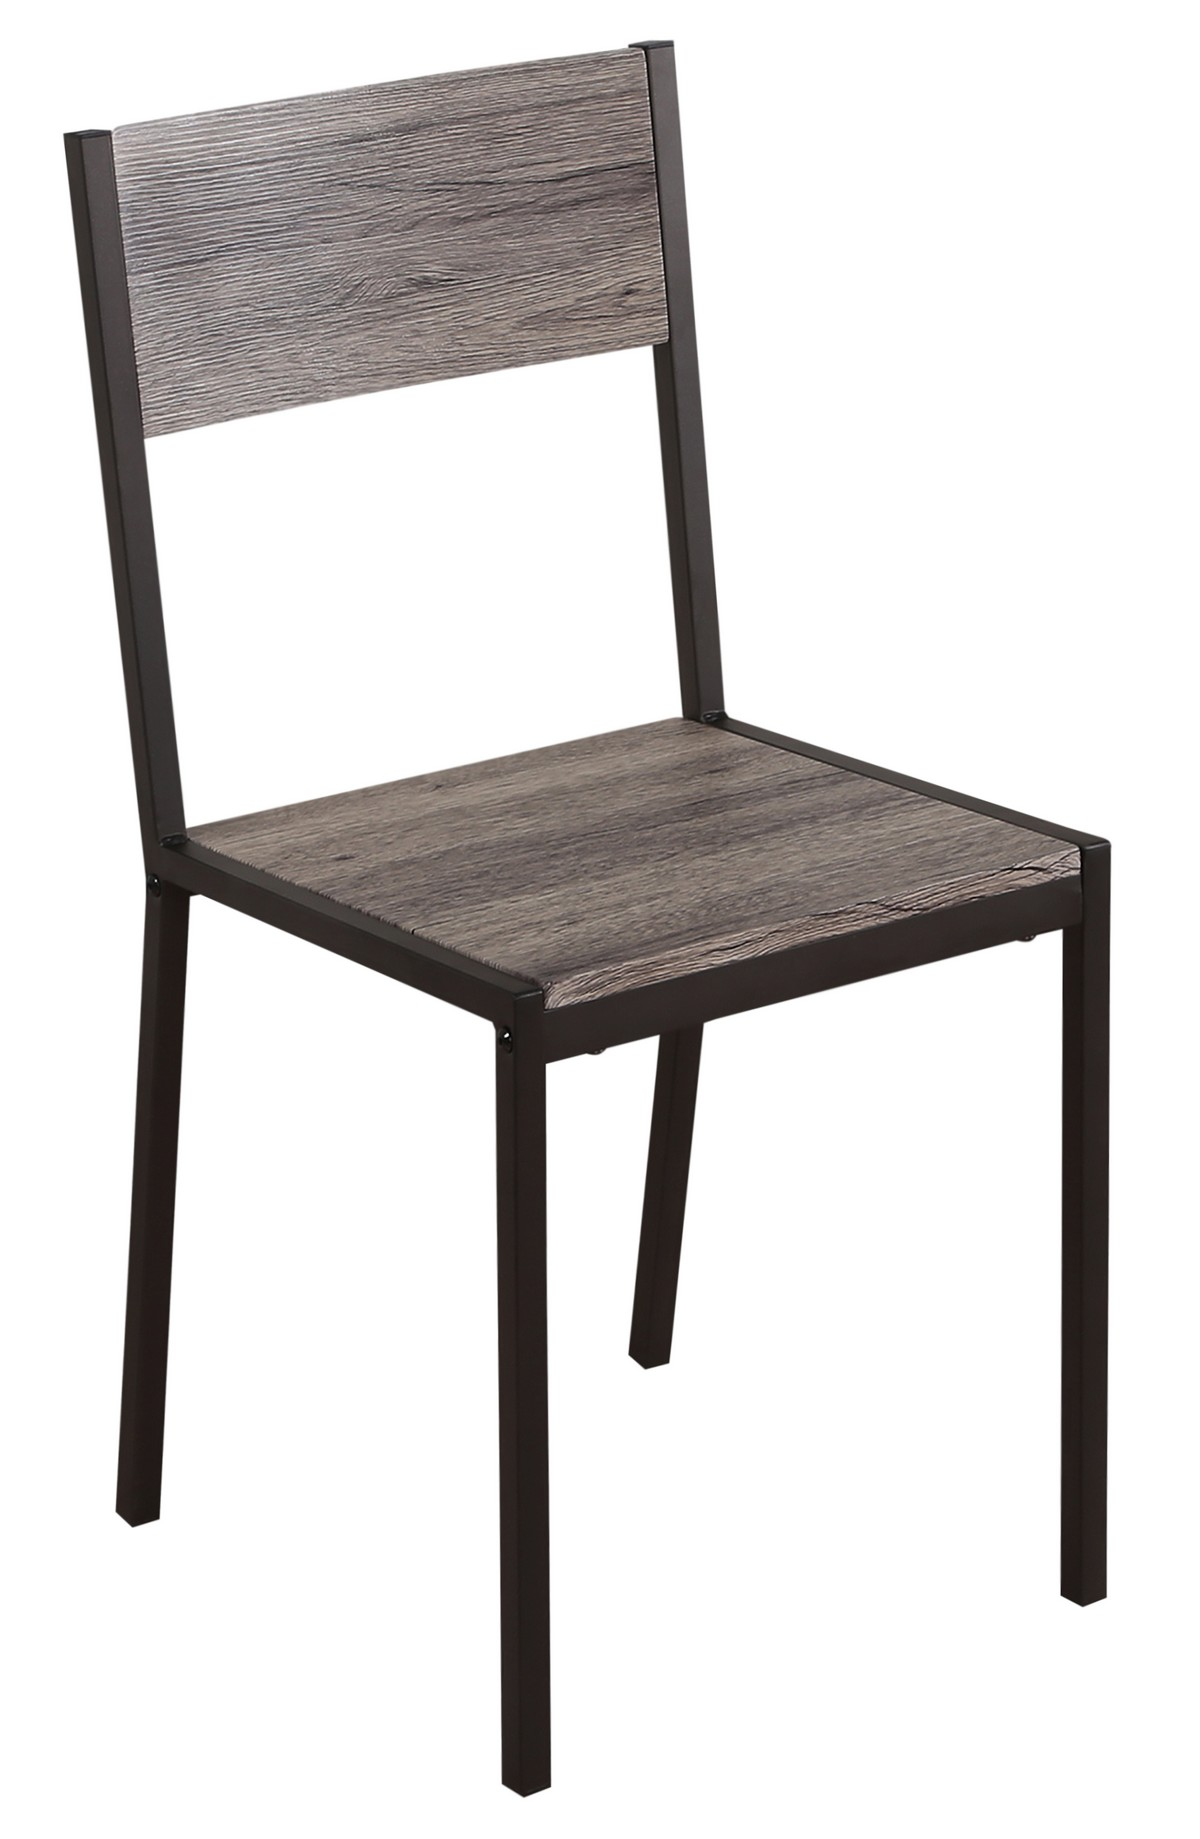 Jedálenská stolička Rofus, dub grain